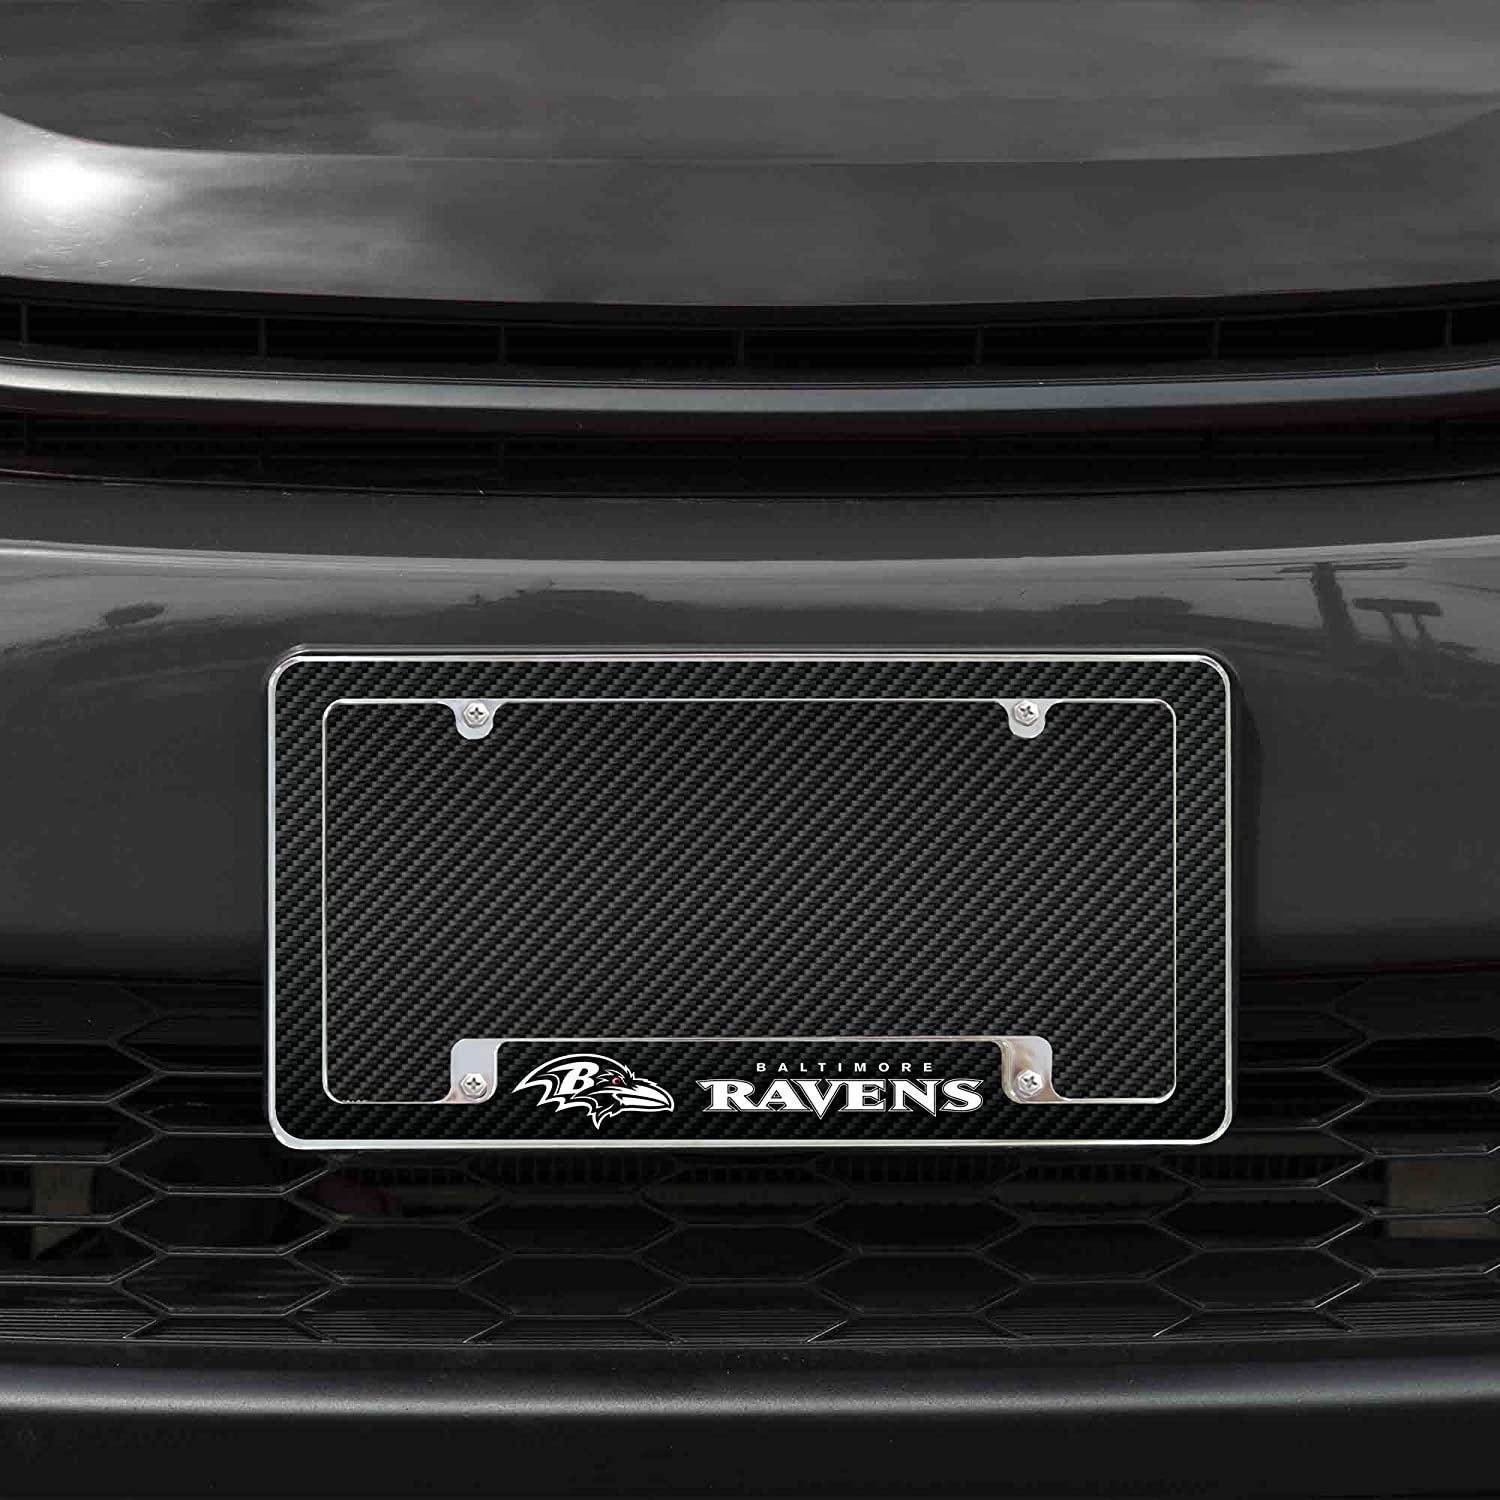 Baltimore Ravens Metal License Plate Frame Tag Cover Carbon Fiber Design 12x6 Inch